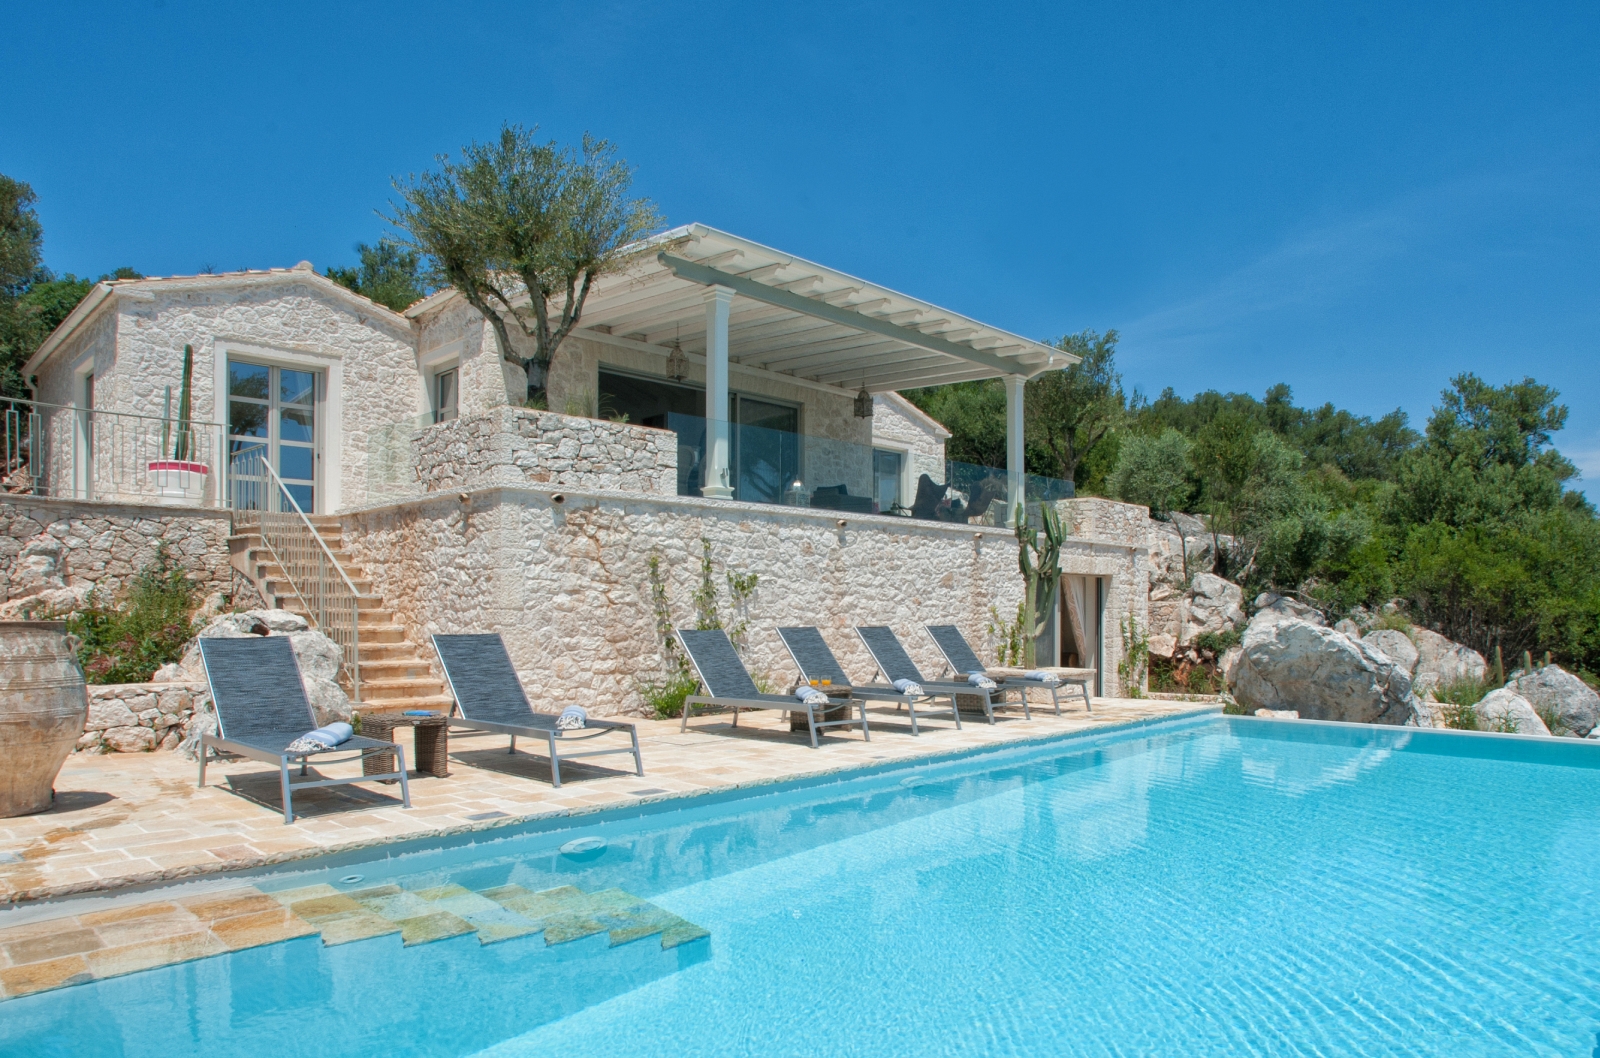 Exterior of villa with pool and loungers at Villa Dionysos, Corfu